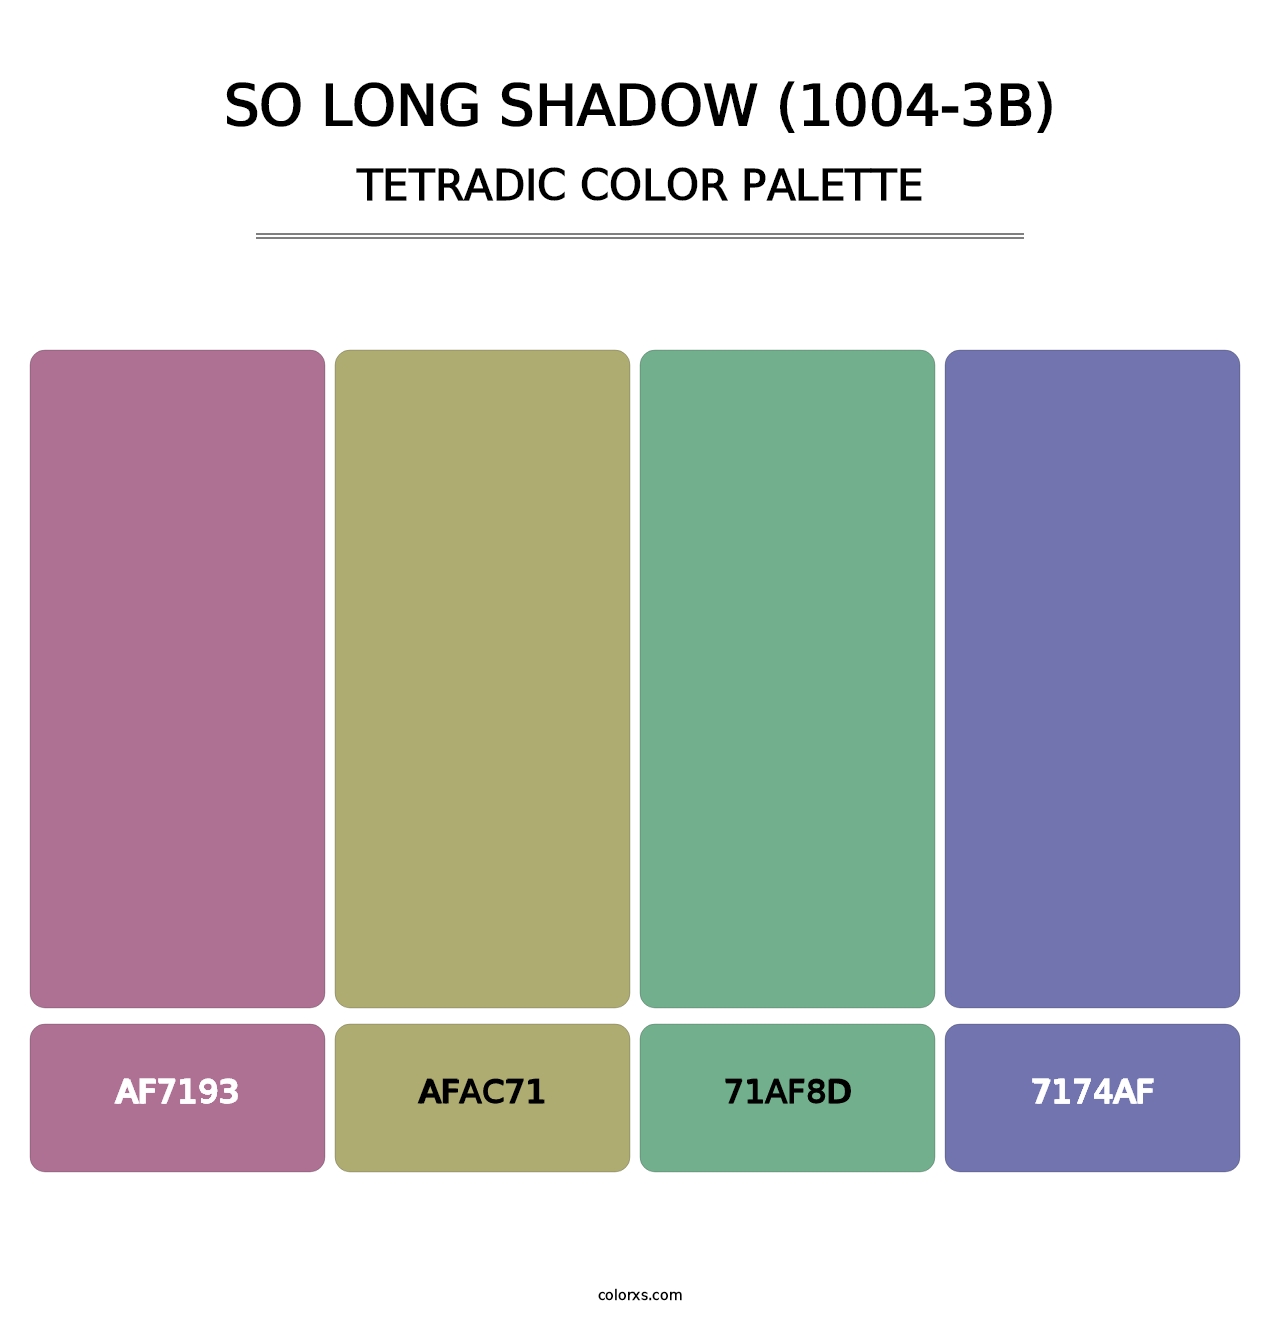 So Long Shadow (1004-3B) - Tetradic Color Palette